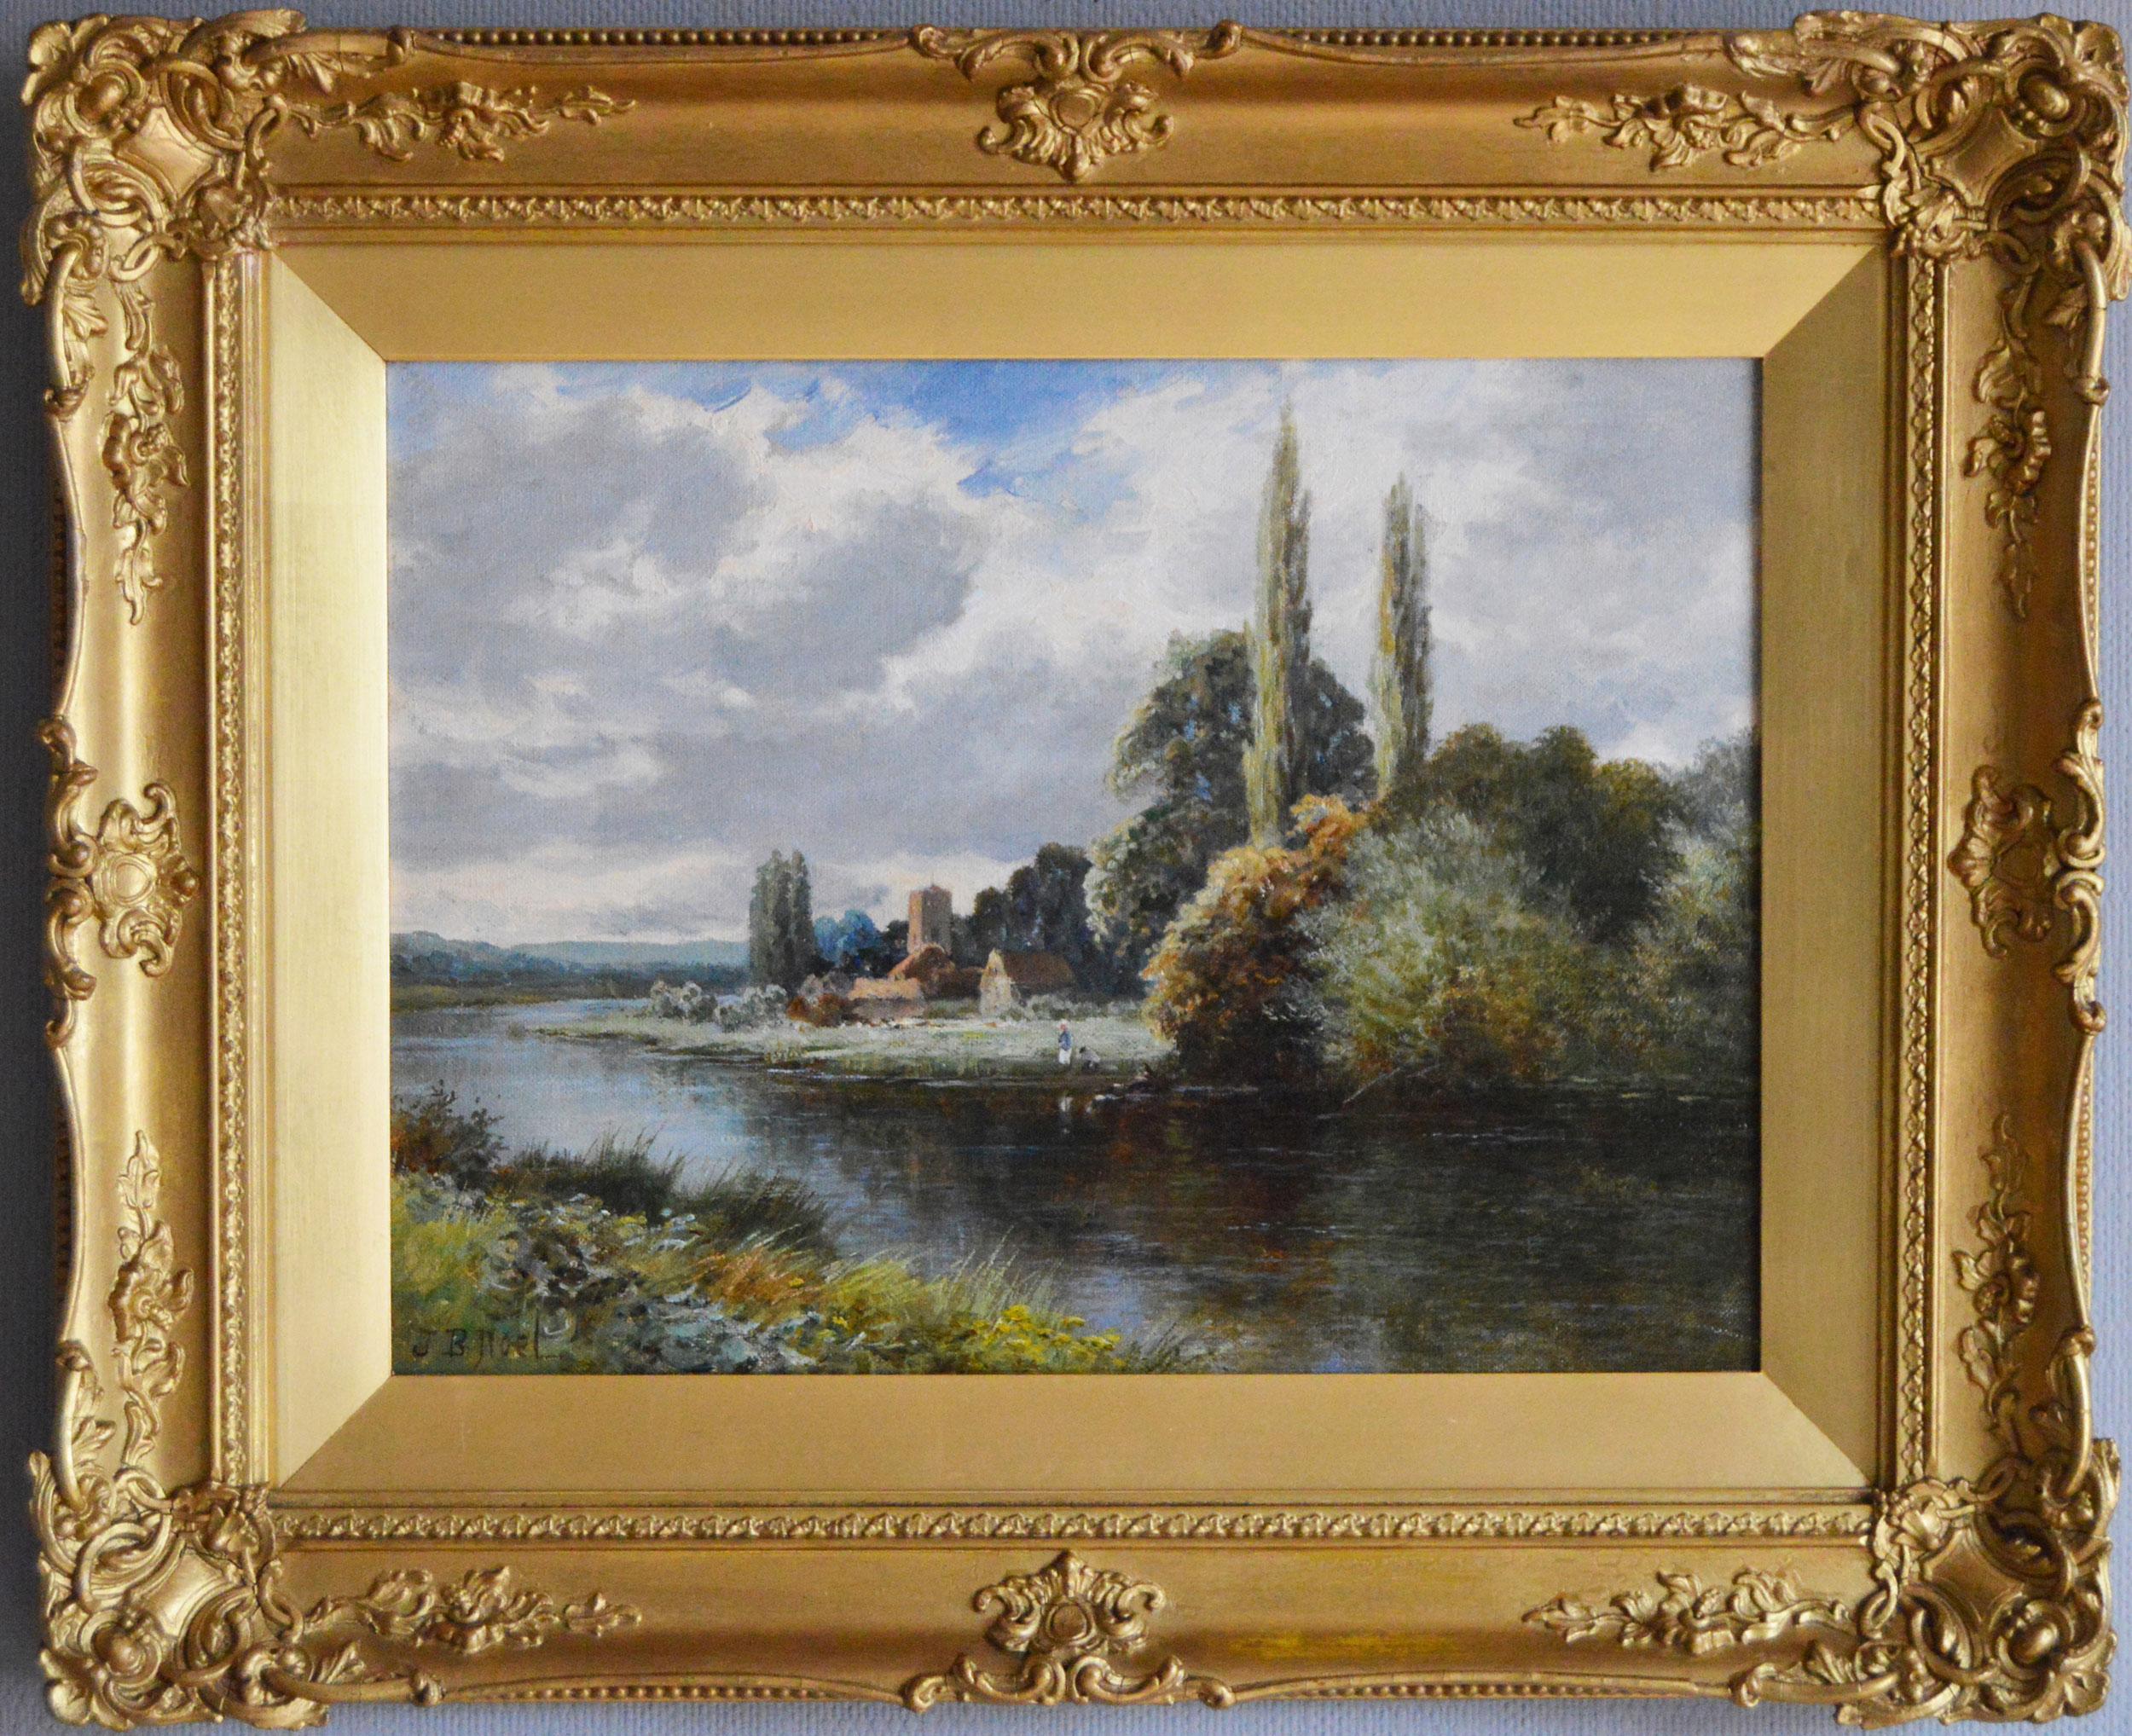 Pair of 19th century landscape oil paintings of the River Avon & Berwyn Valley - Painting by John Bates Noel